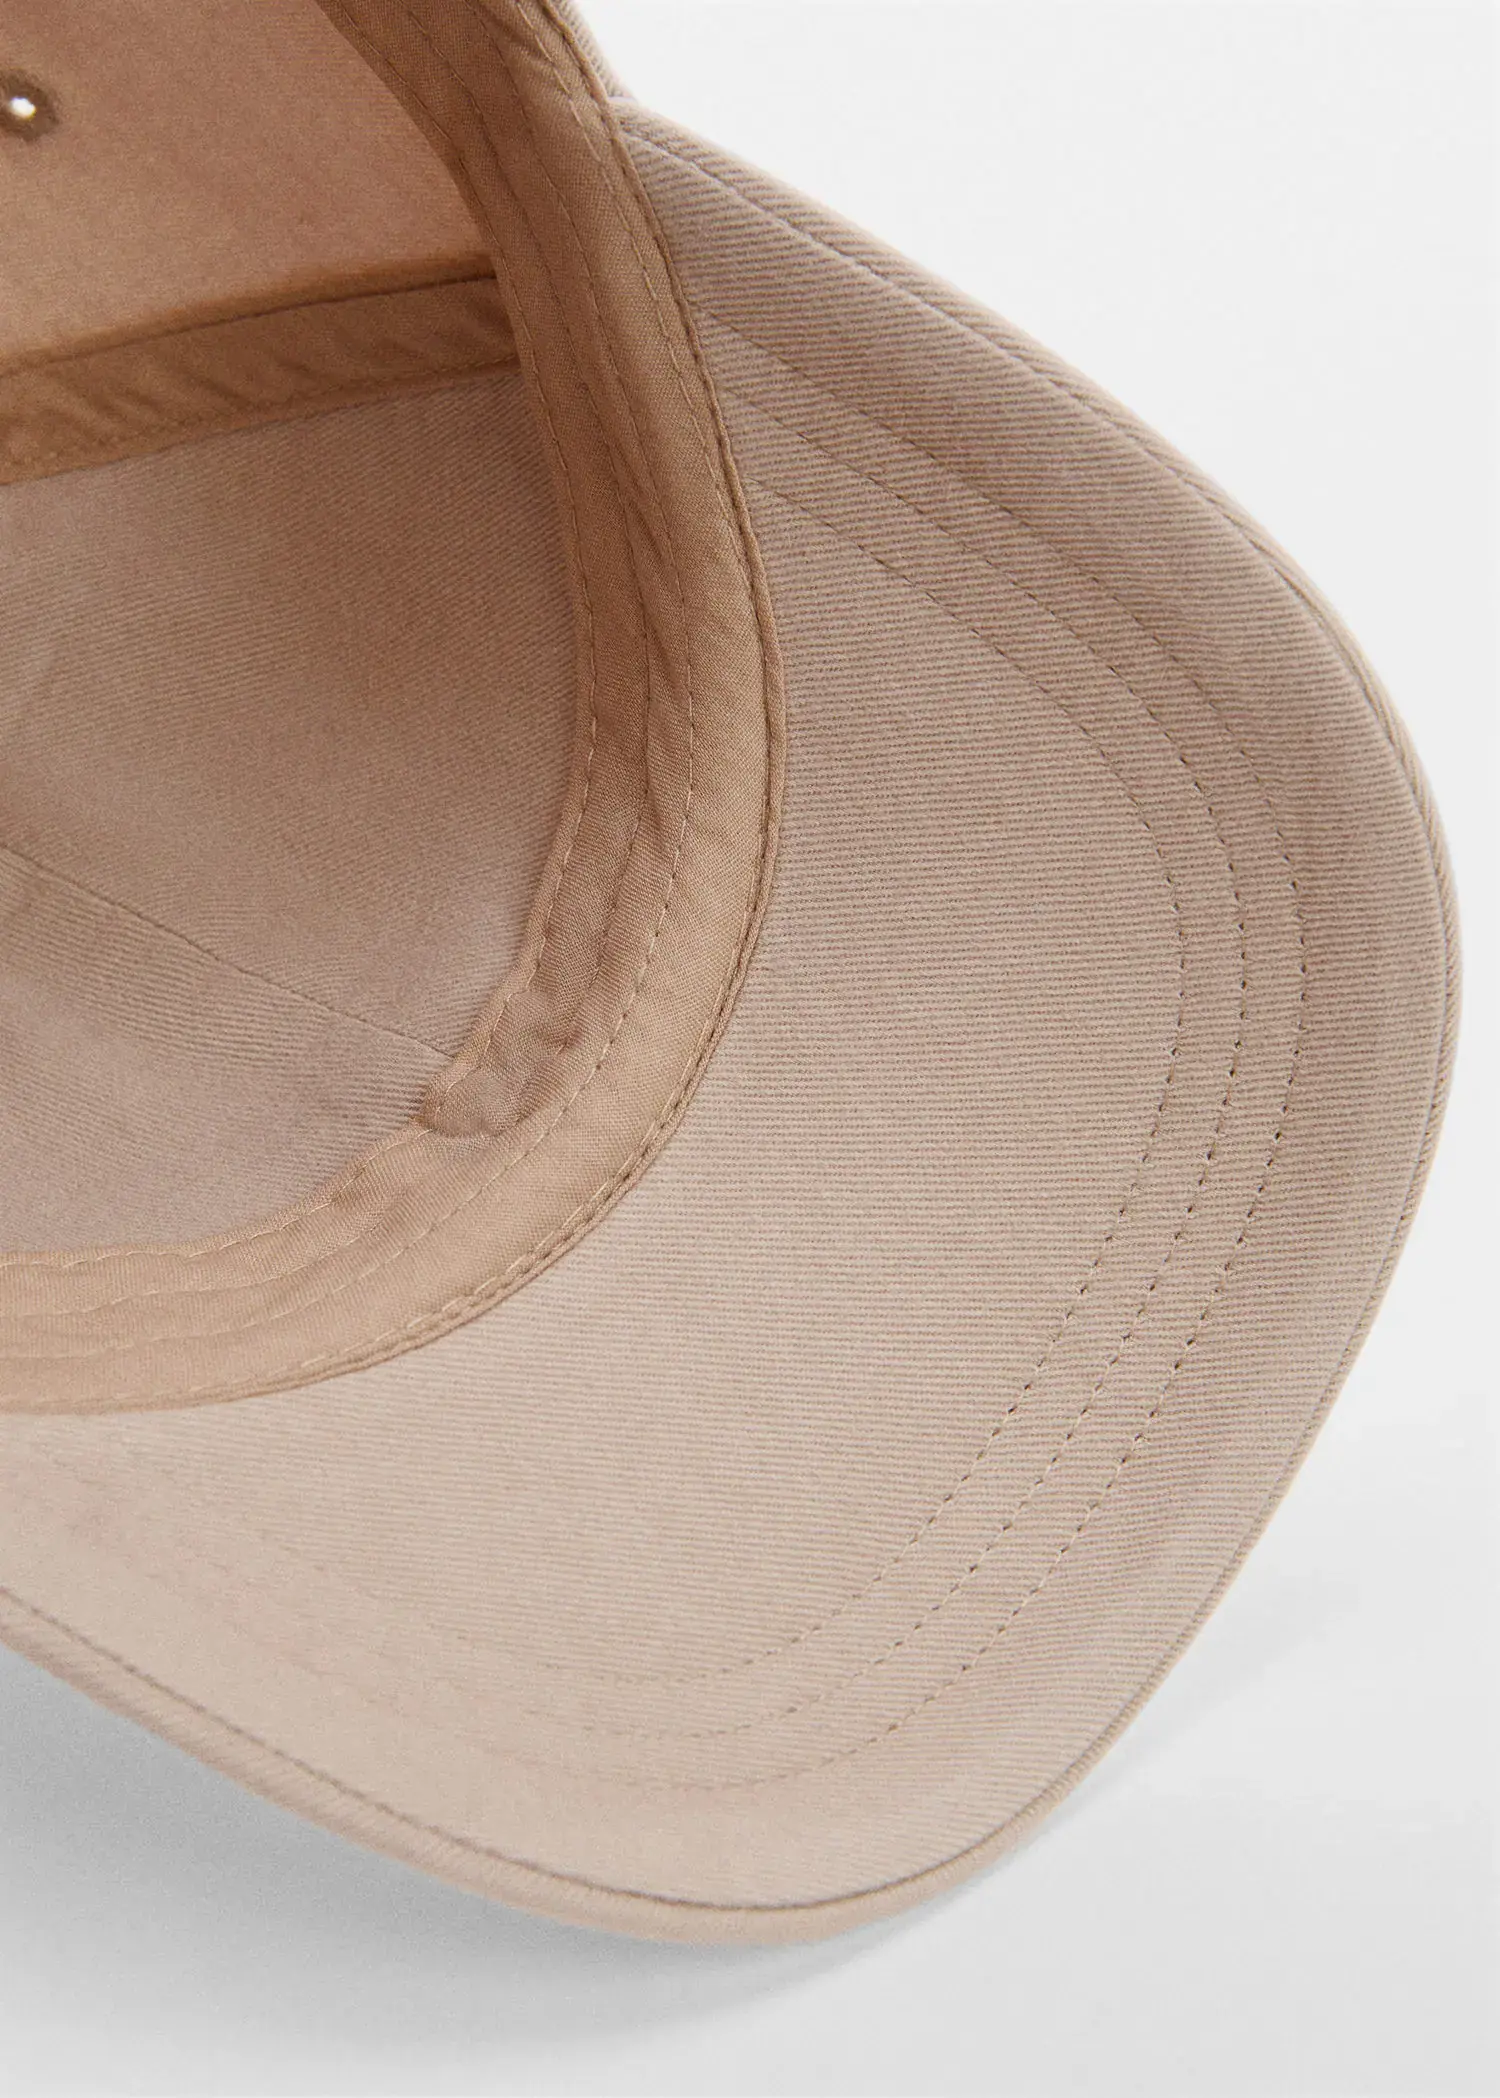 Mango Organic cotton cap. a close-up view of a tan baseball hat. 